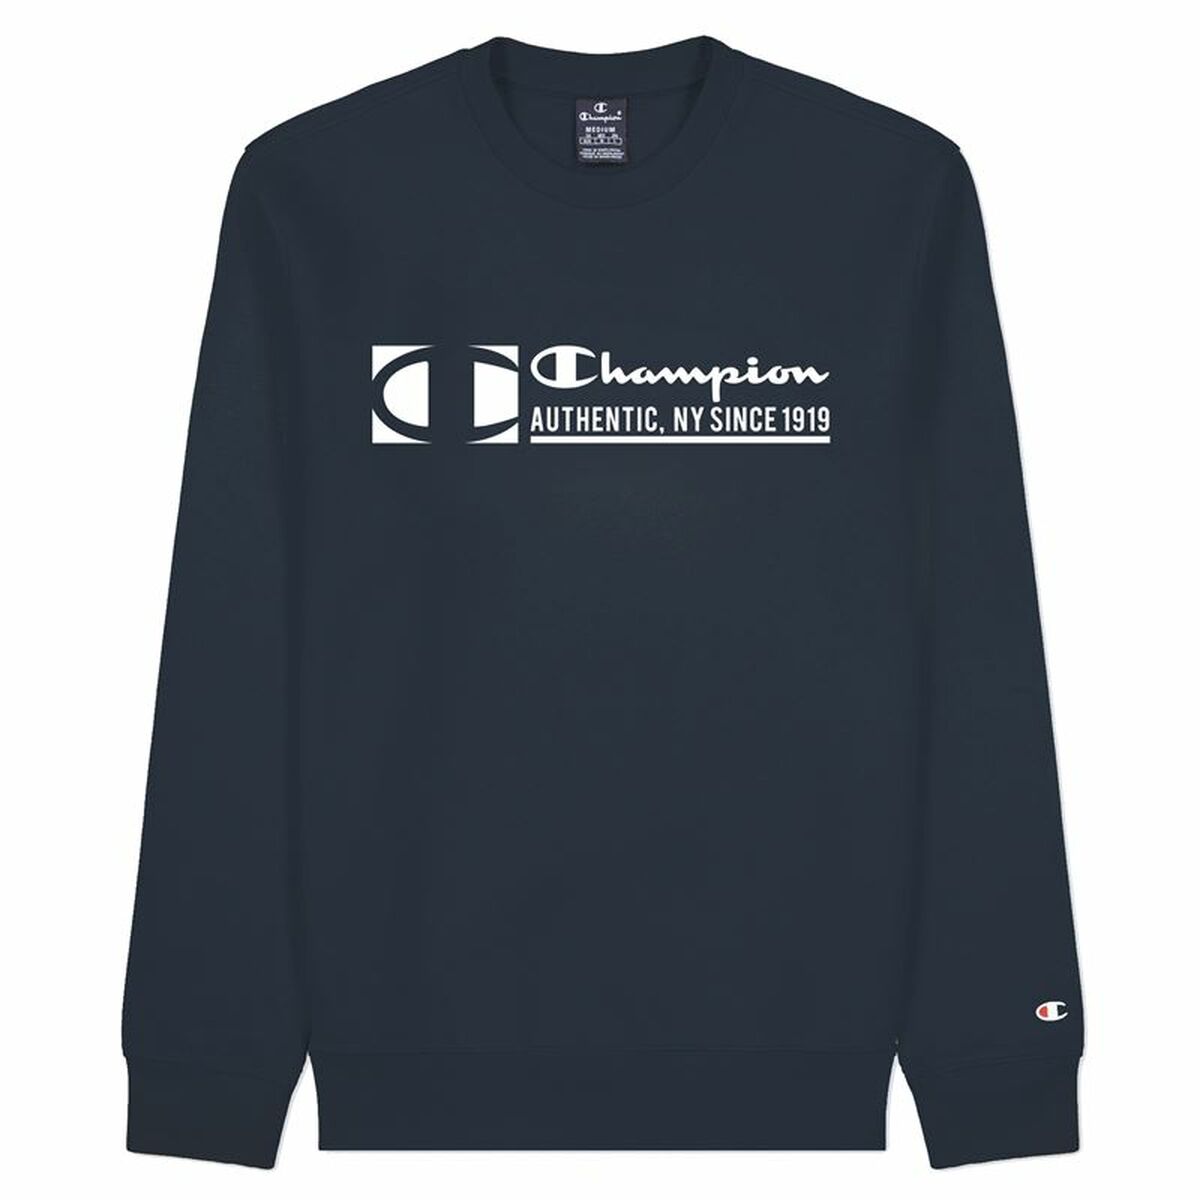 Kaufe Herren Sweater ohne Kapuze Champion Authentic New York Dunkelblau bei AWK Flagship um € 59.00